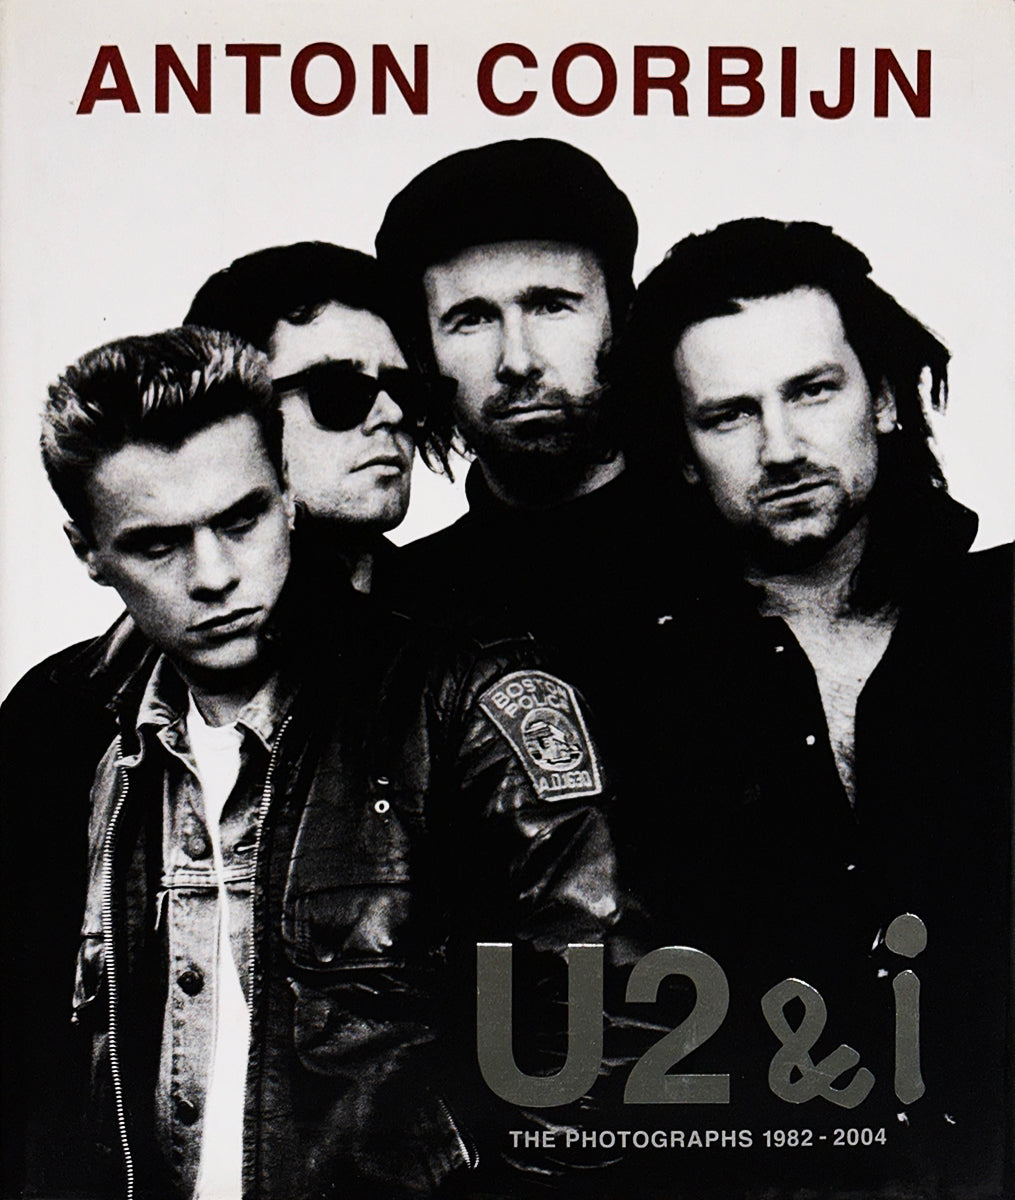 U2 and I: The Photographs 1982-2004